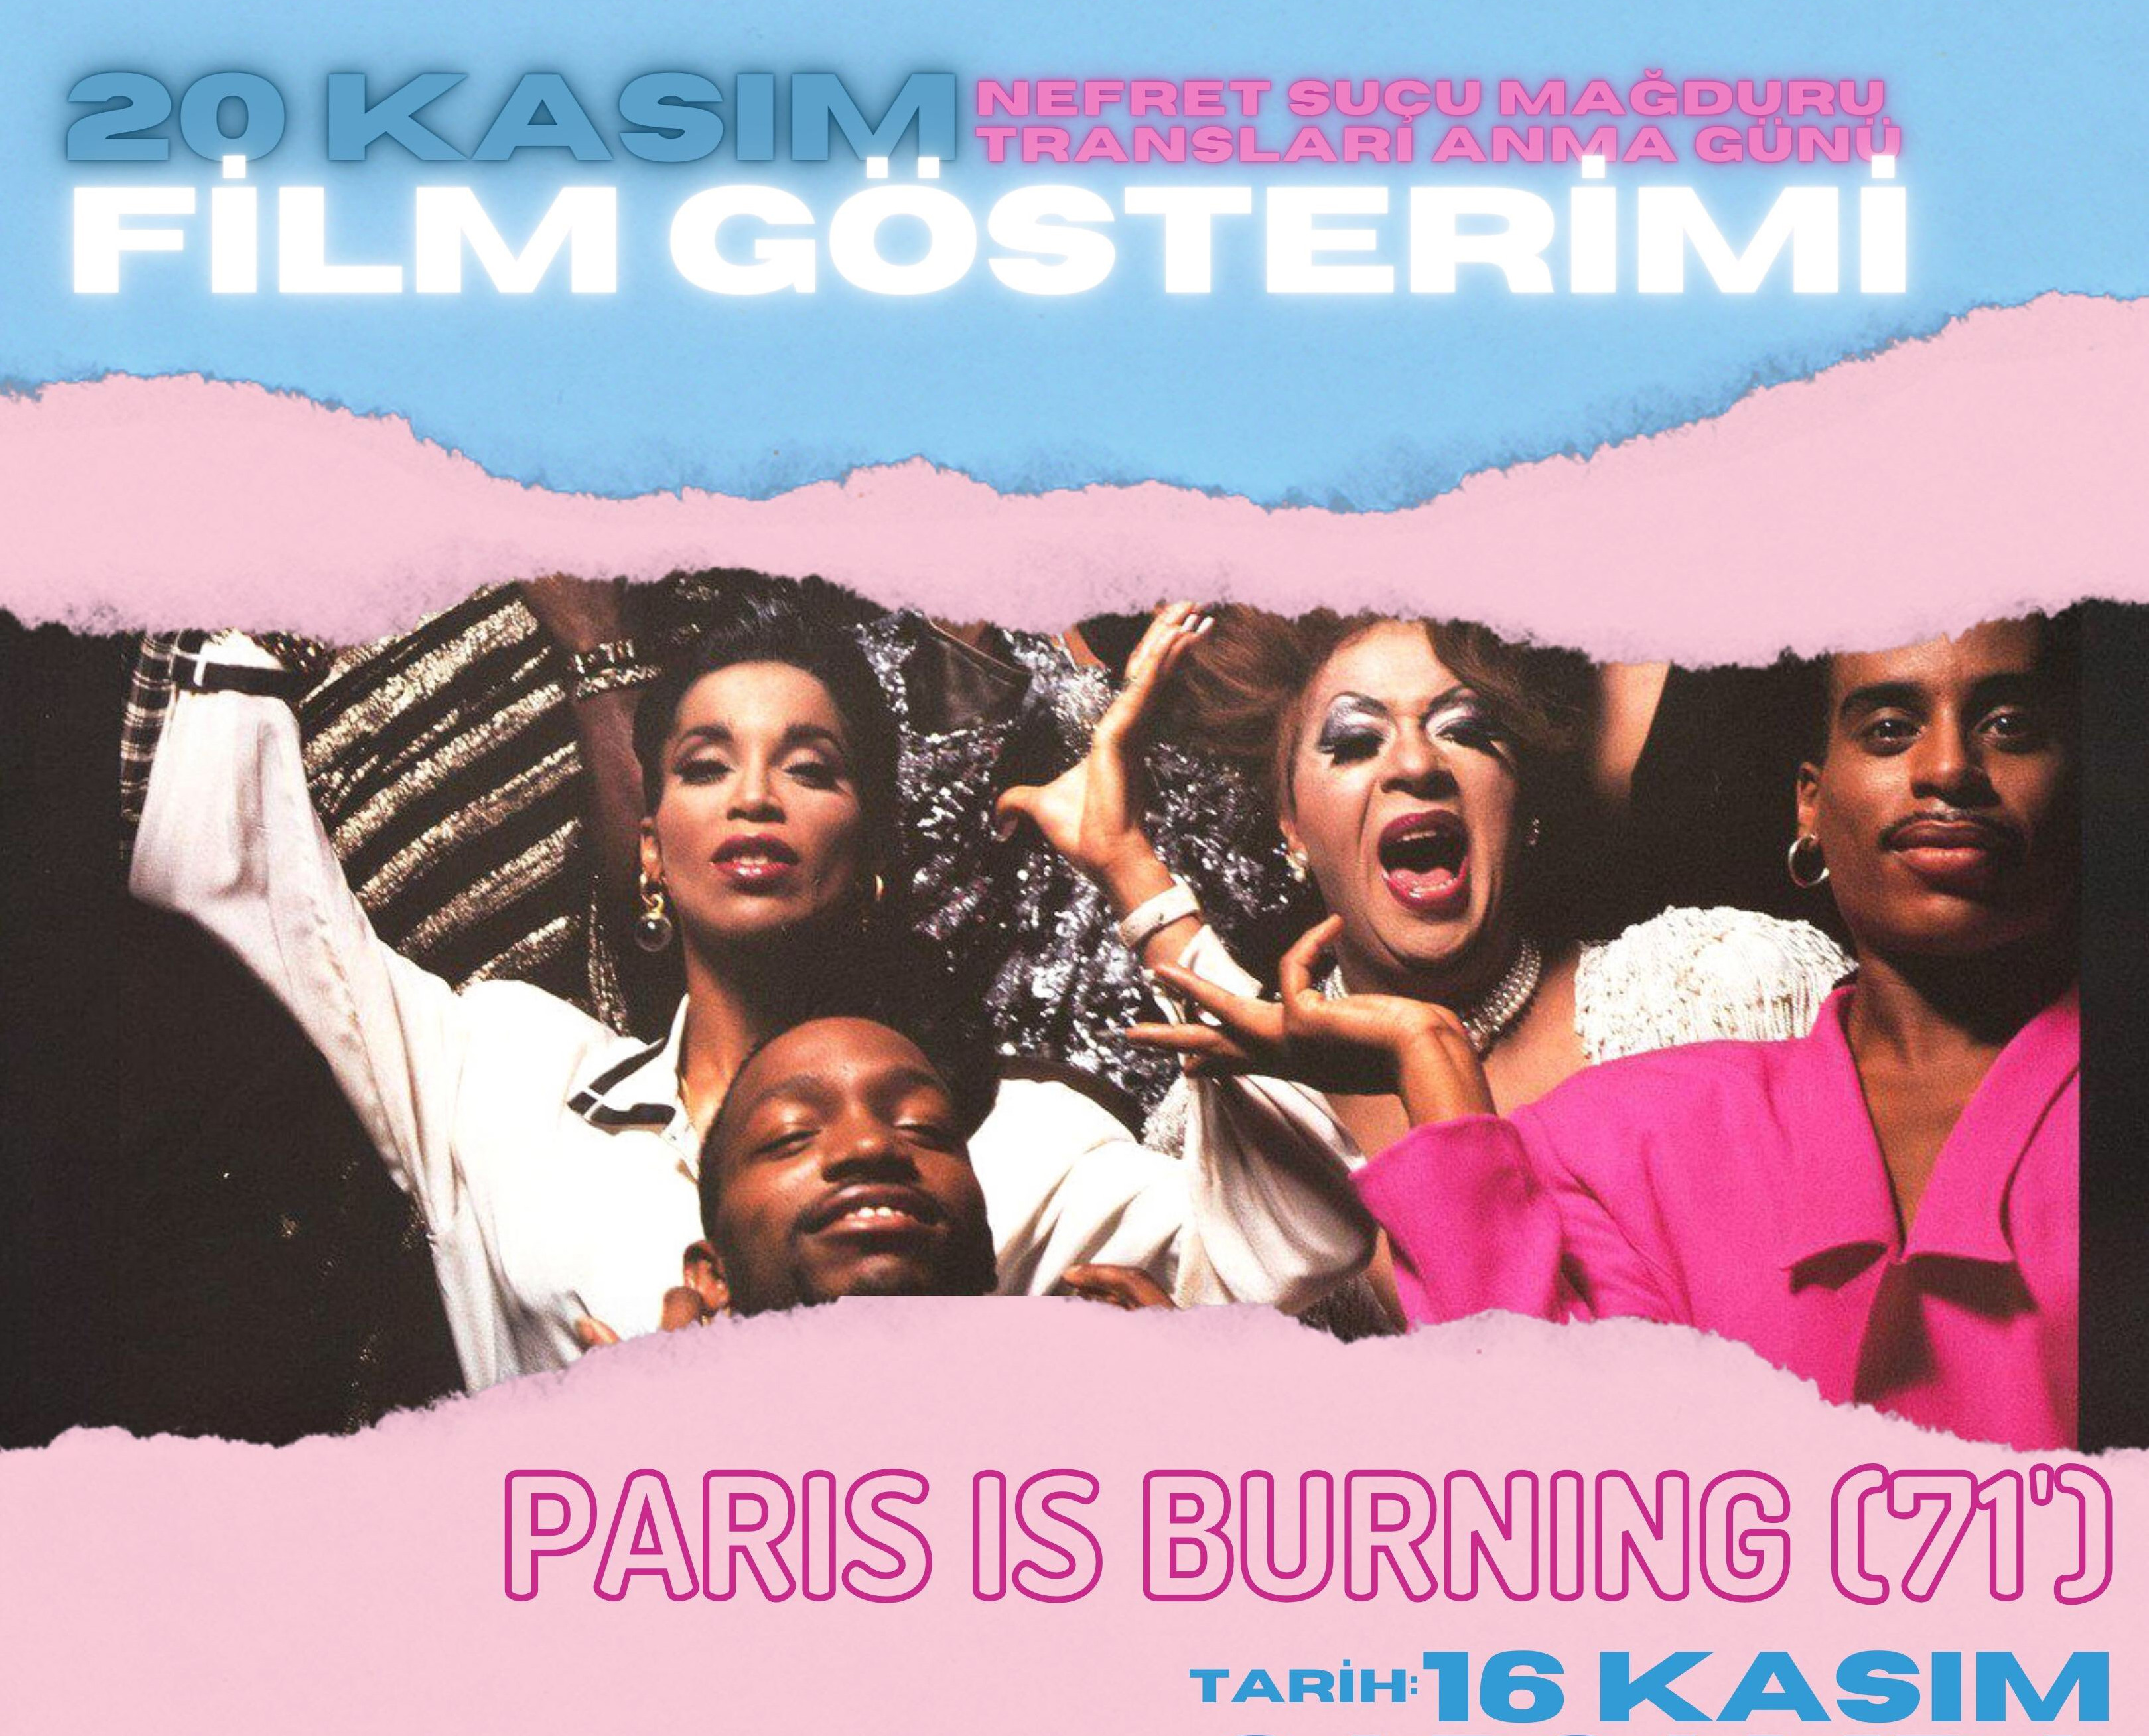 Kadıköy Kaymakamlığı “Paris is Burning” gösterimini yasakladı! Kaos GL - LGBTİ+ Haber Portalı